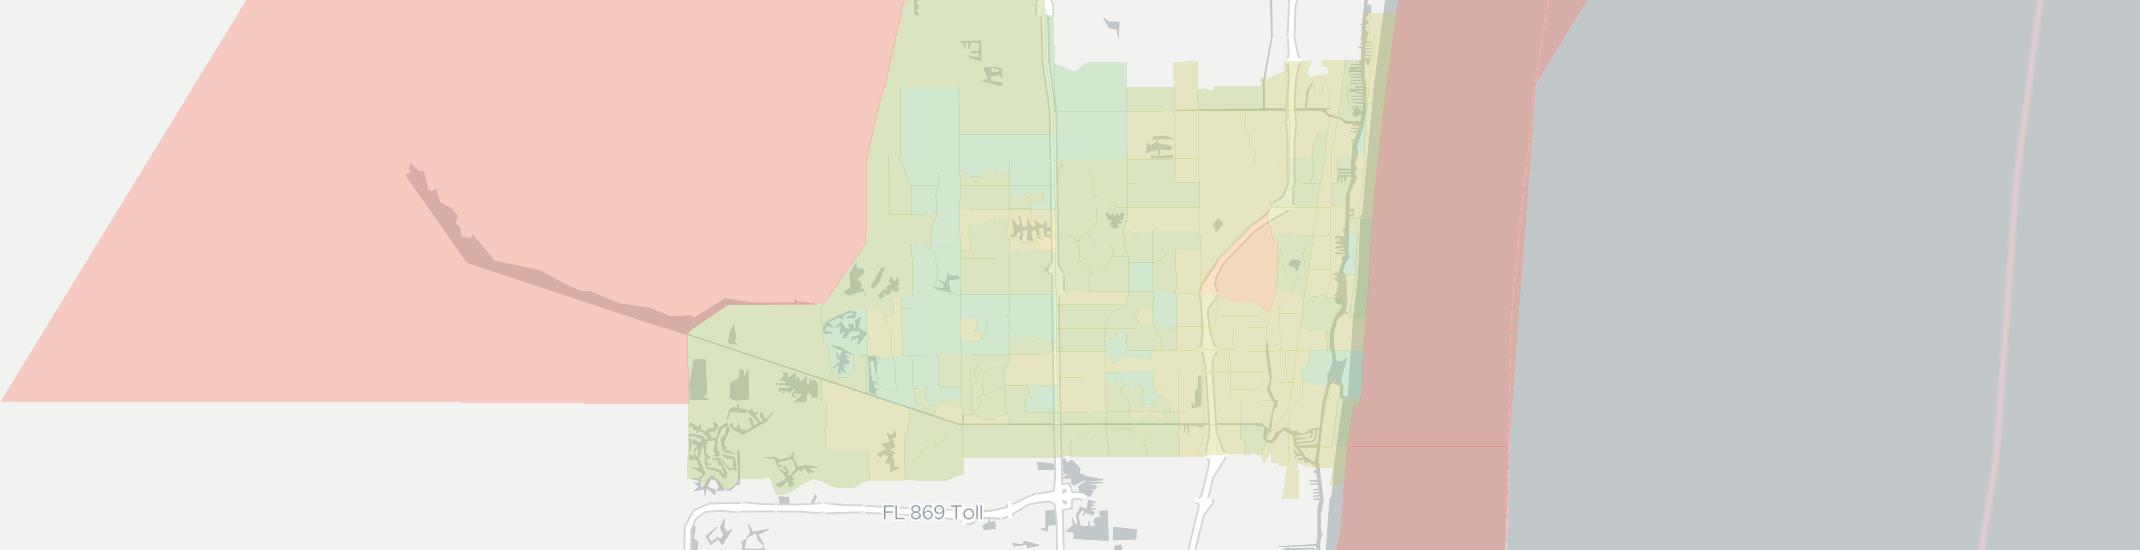 Boca Raton Zip Code Map - Maping Resources